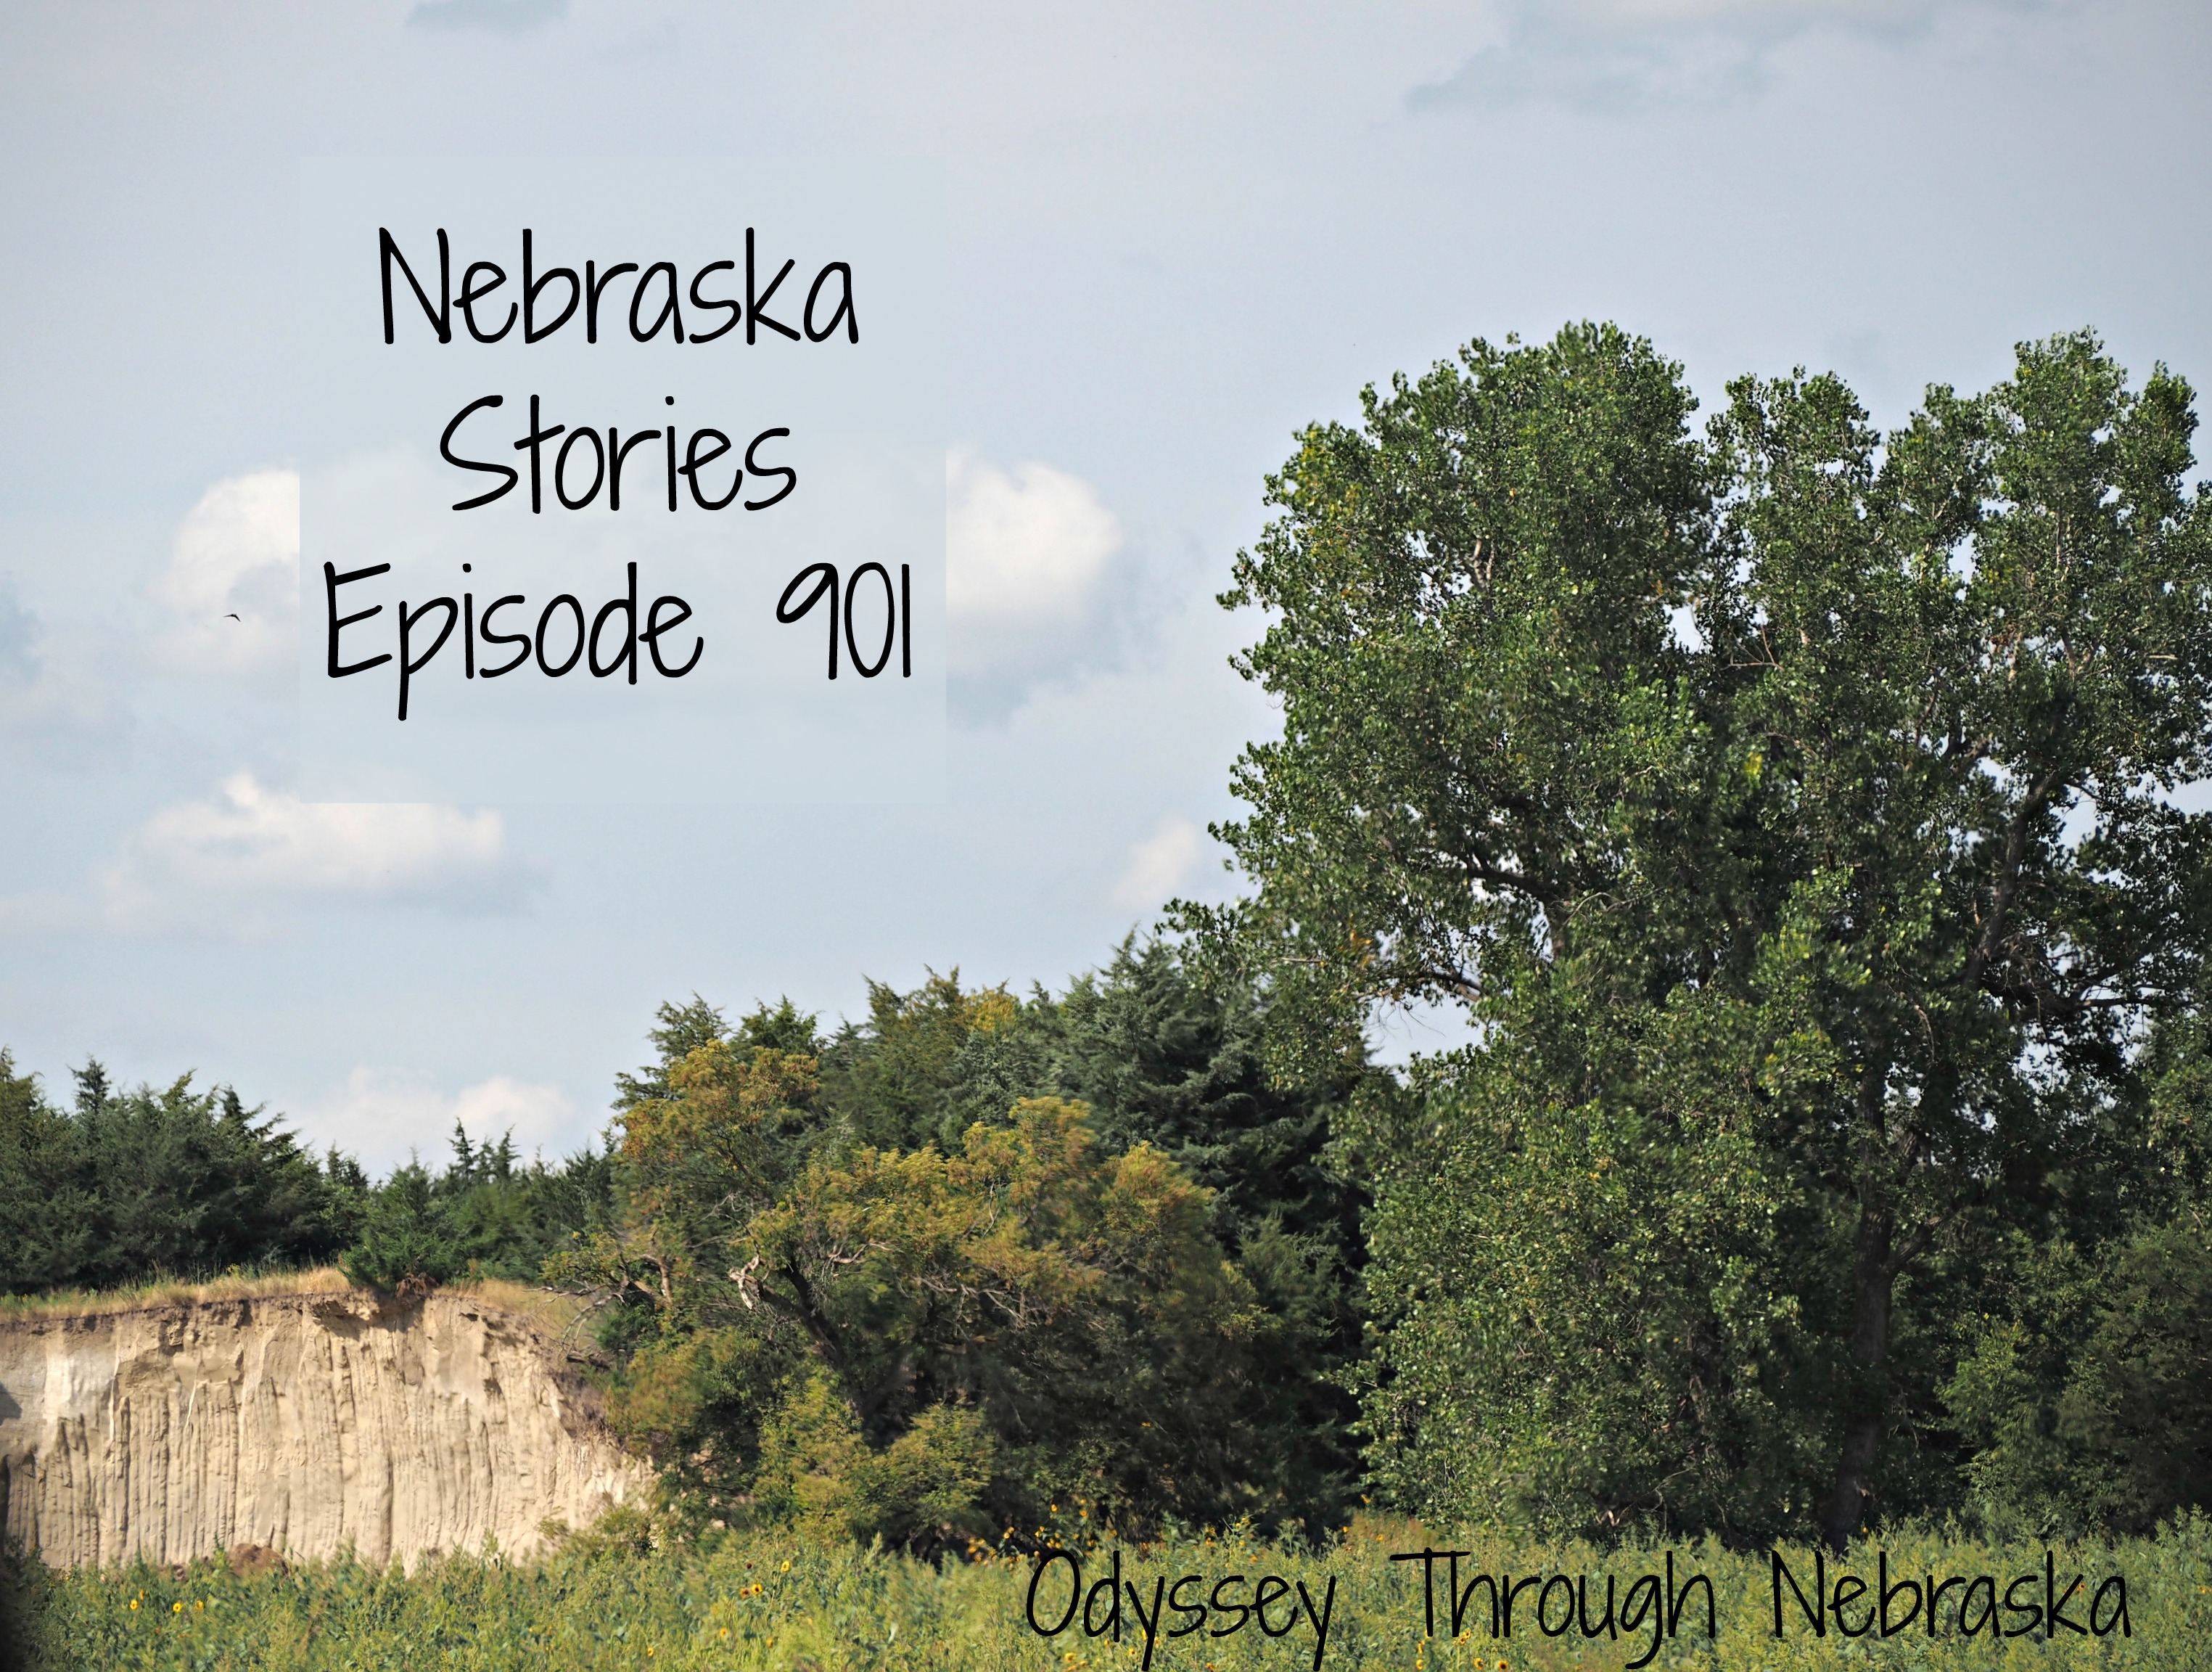 Learning for our Enviornment Nebraska Stories Episode 901